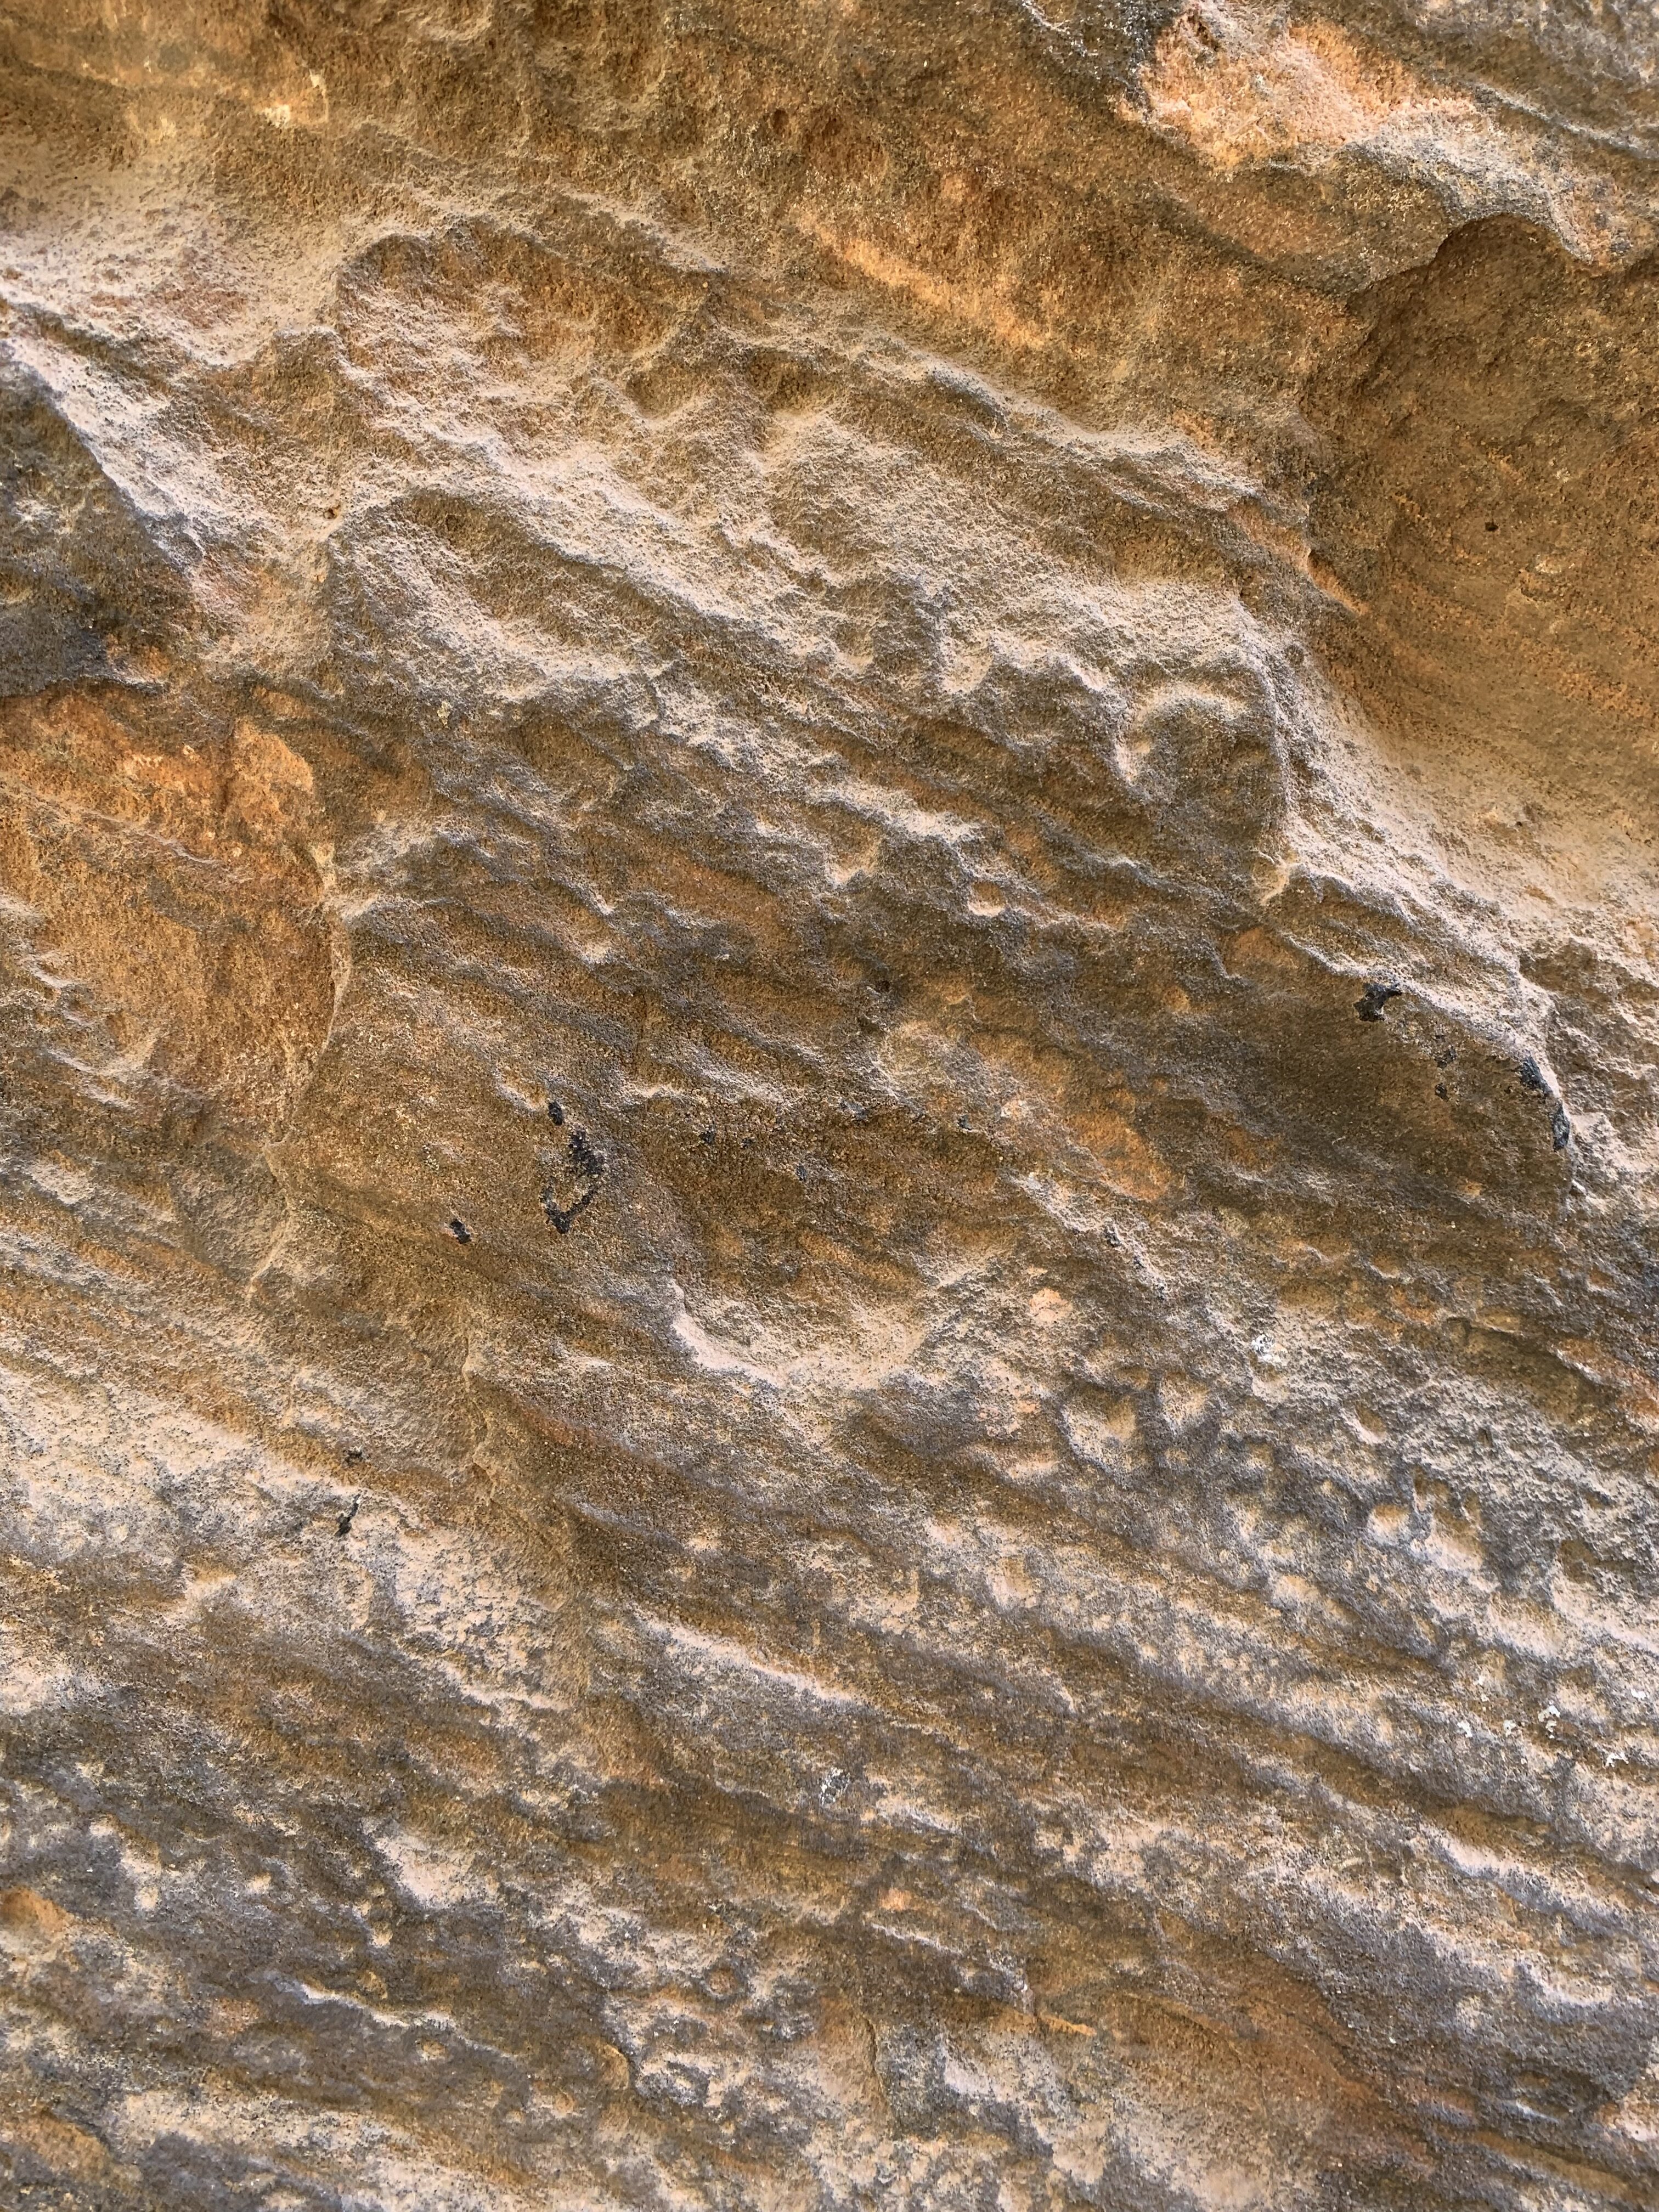 Sand stone rock face